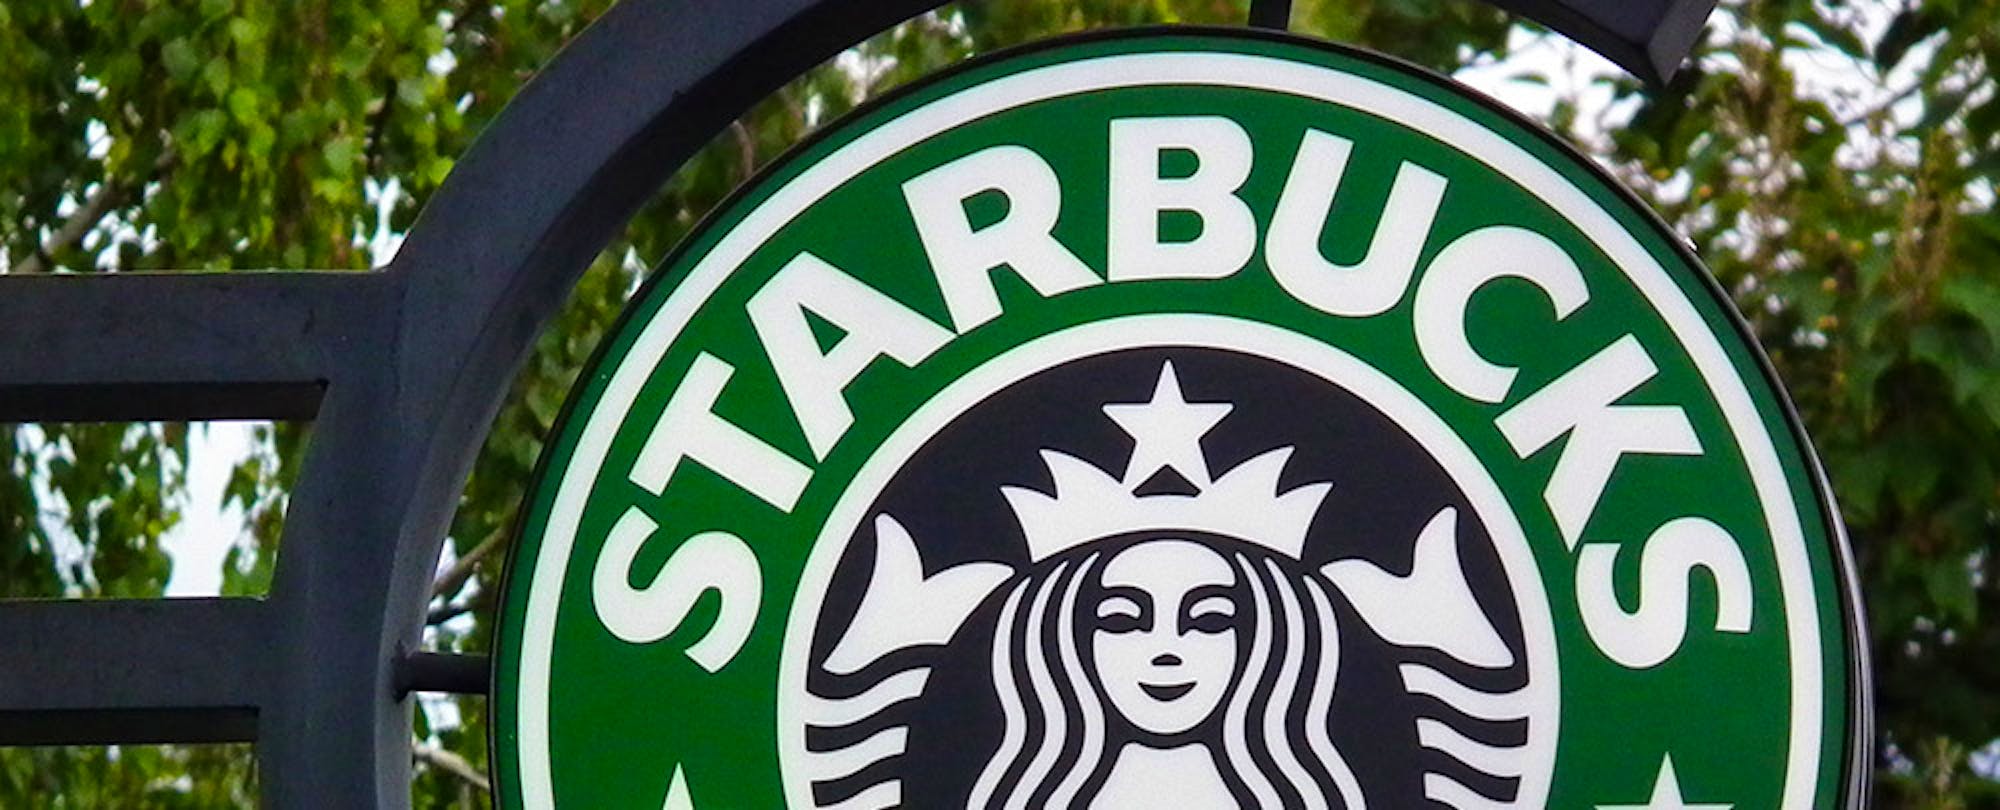 What is Starbucks' slogan?